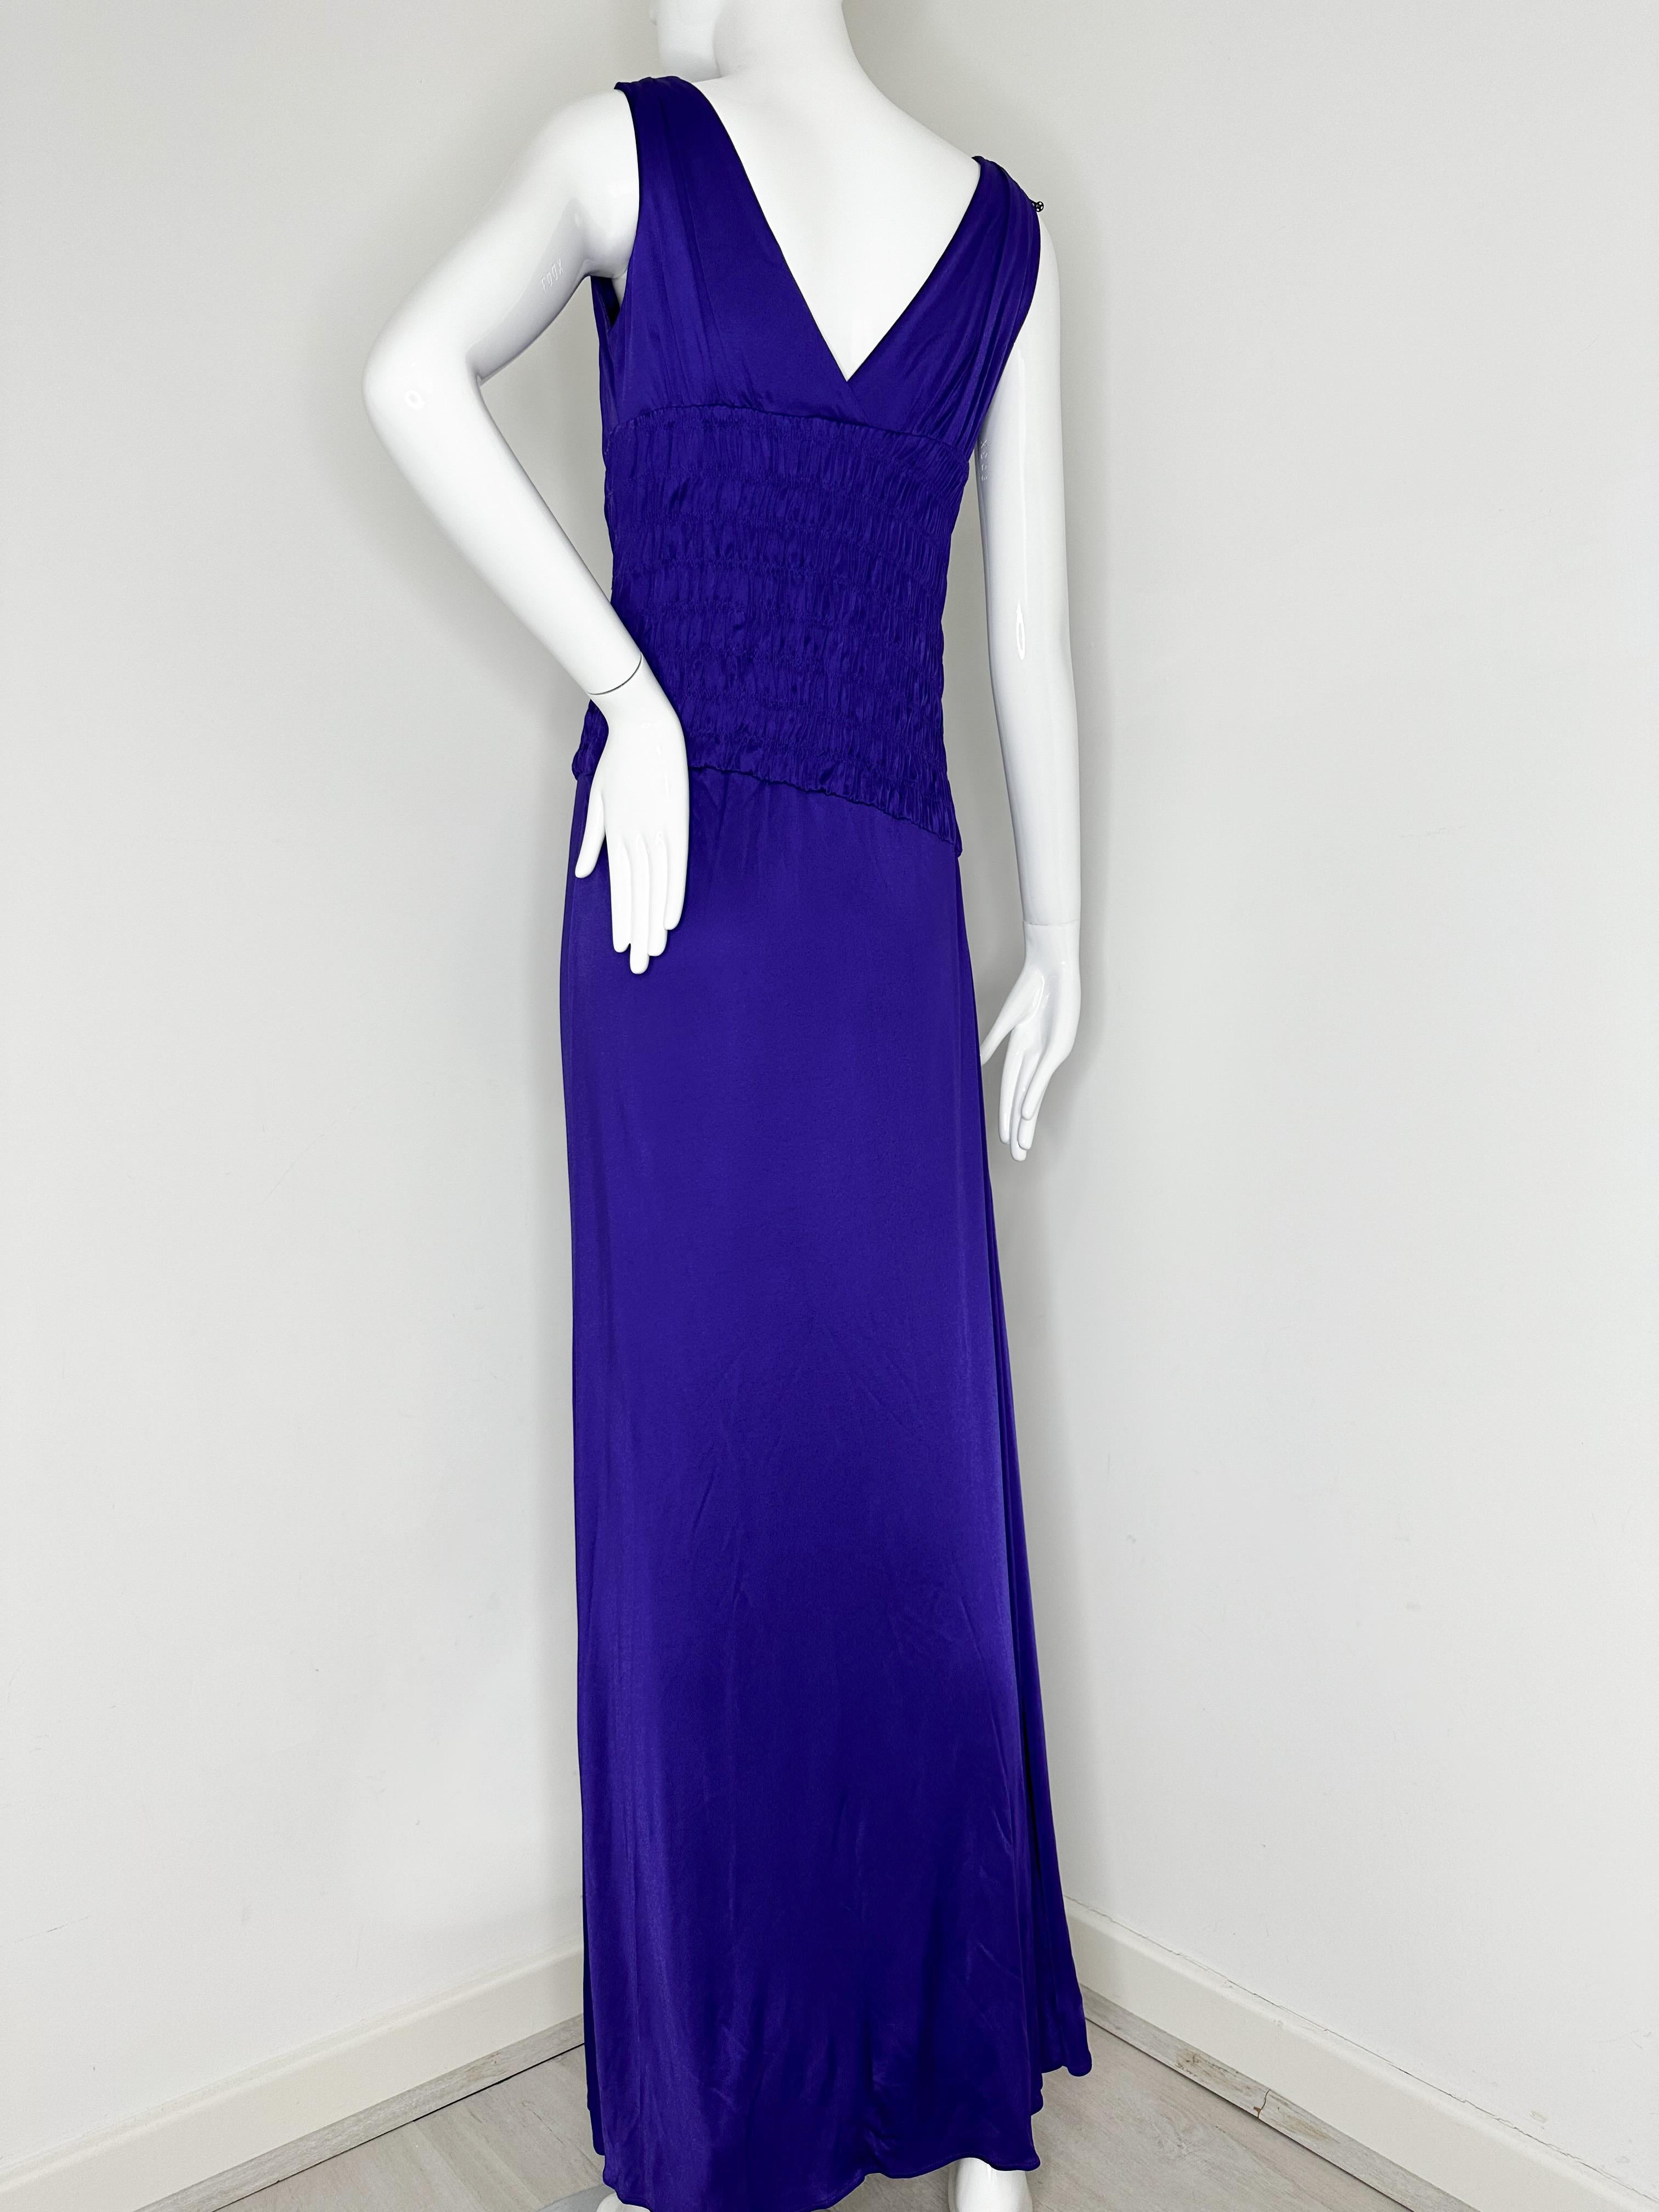 Christian Dior by John Galliano 2009 purple maxi dress 6